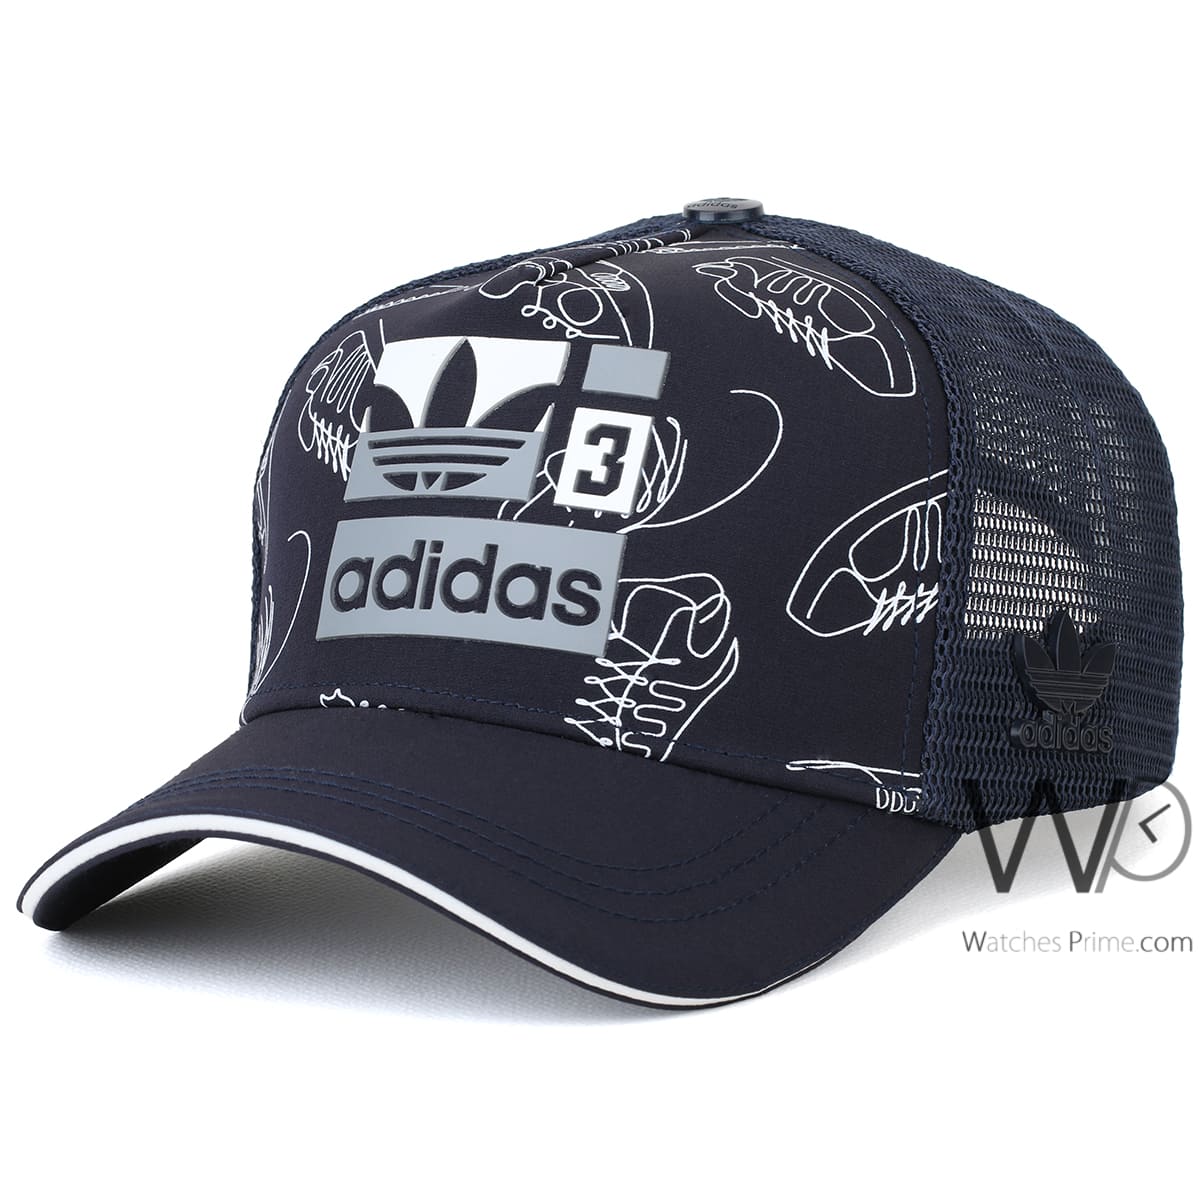 adidas-trucker-navy-blue-cap-mesh-men-hat